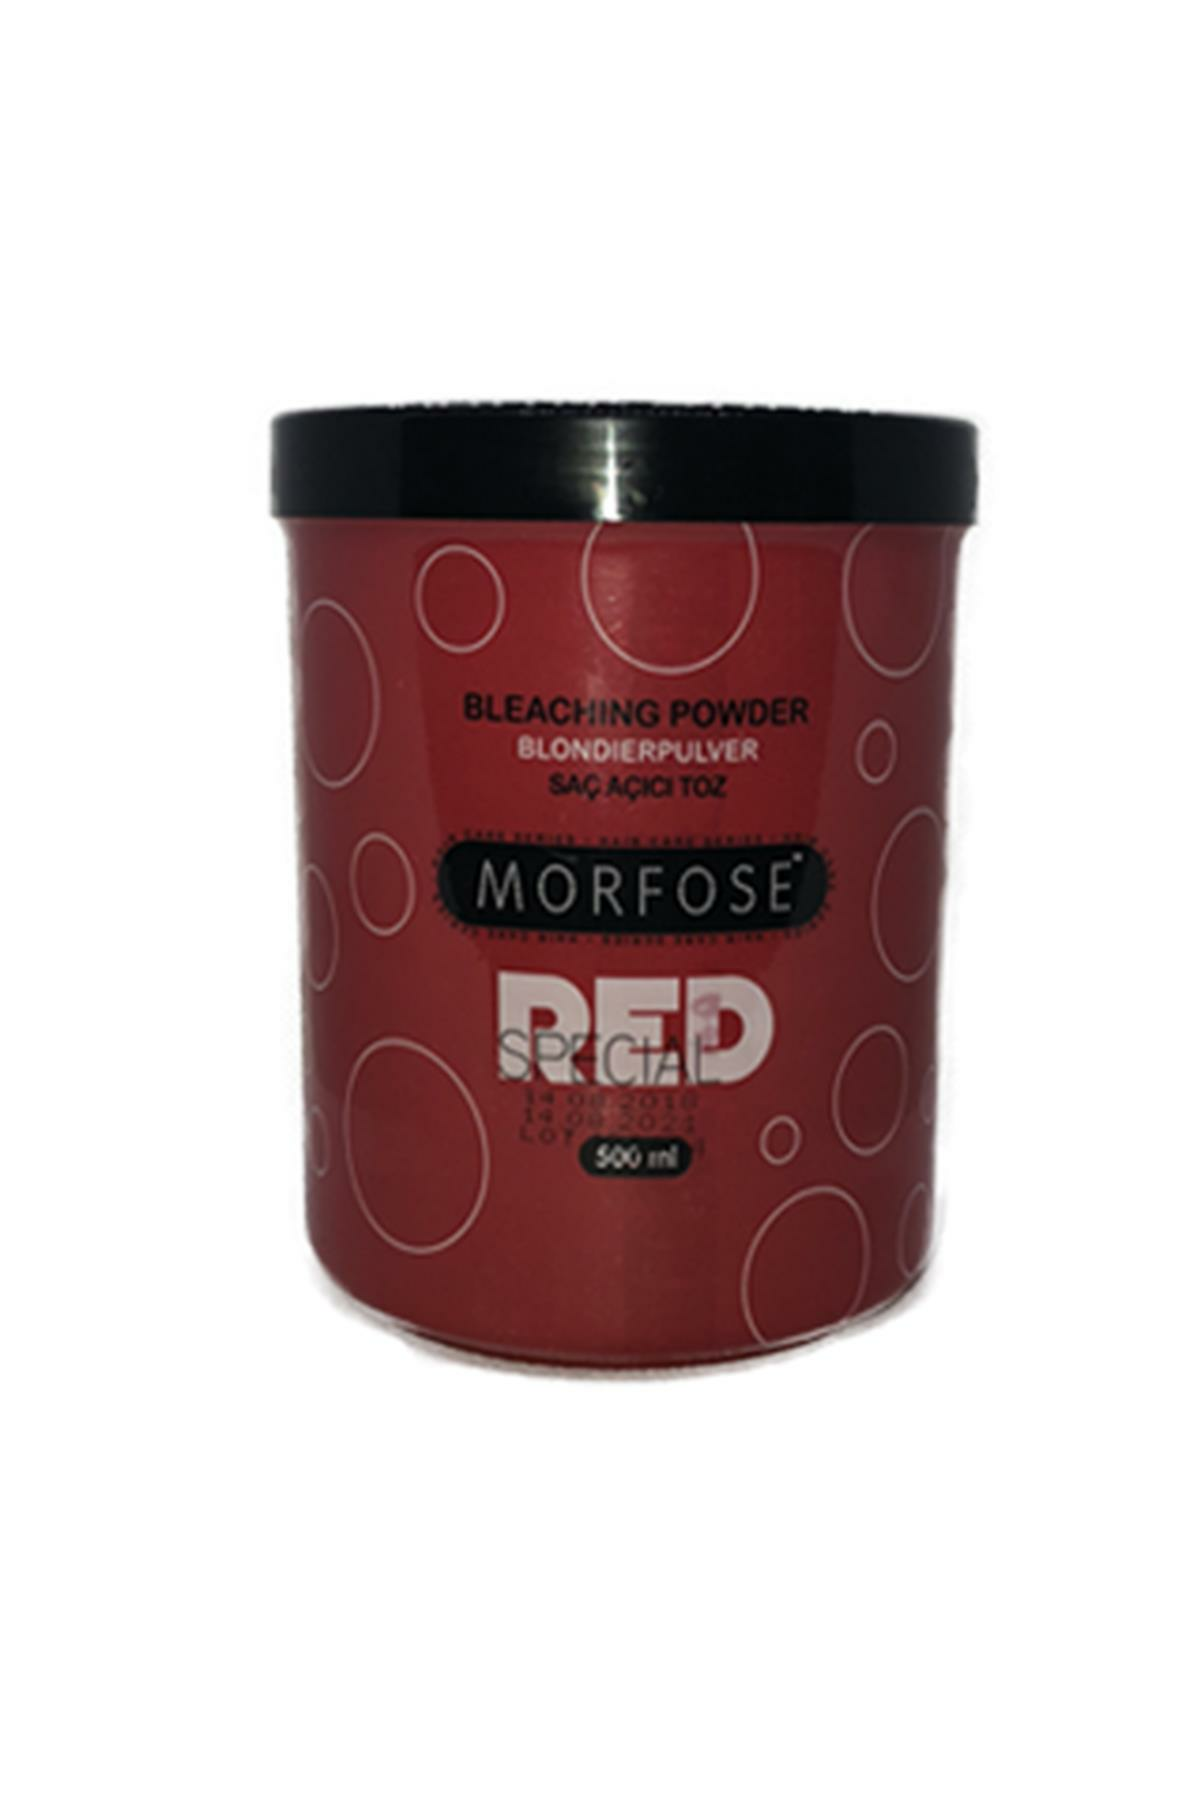 Morfose Red Kırmızı Toz Açıcı 500 ml.